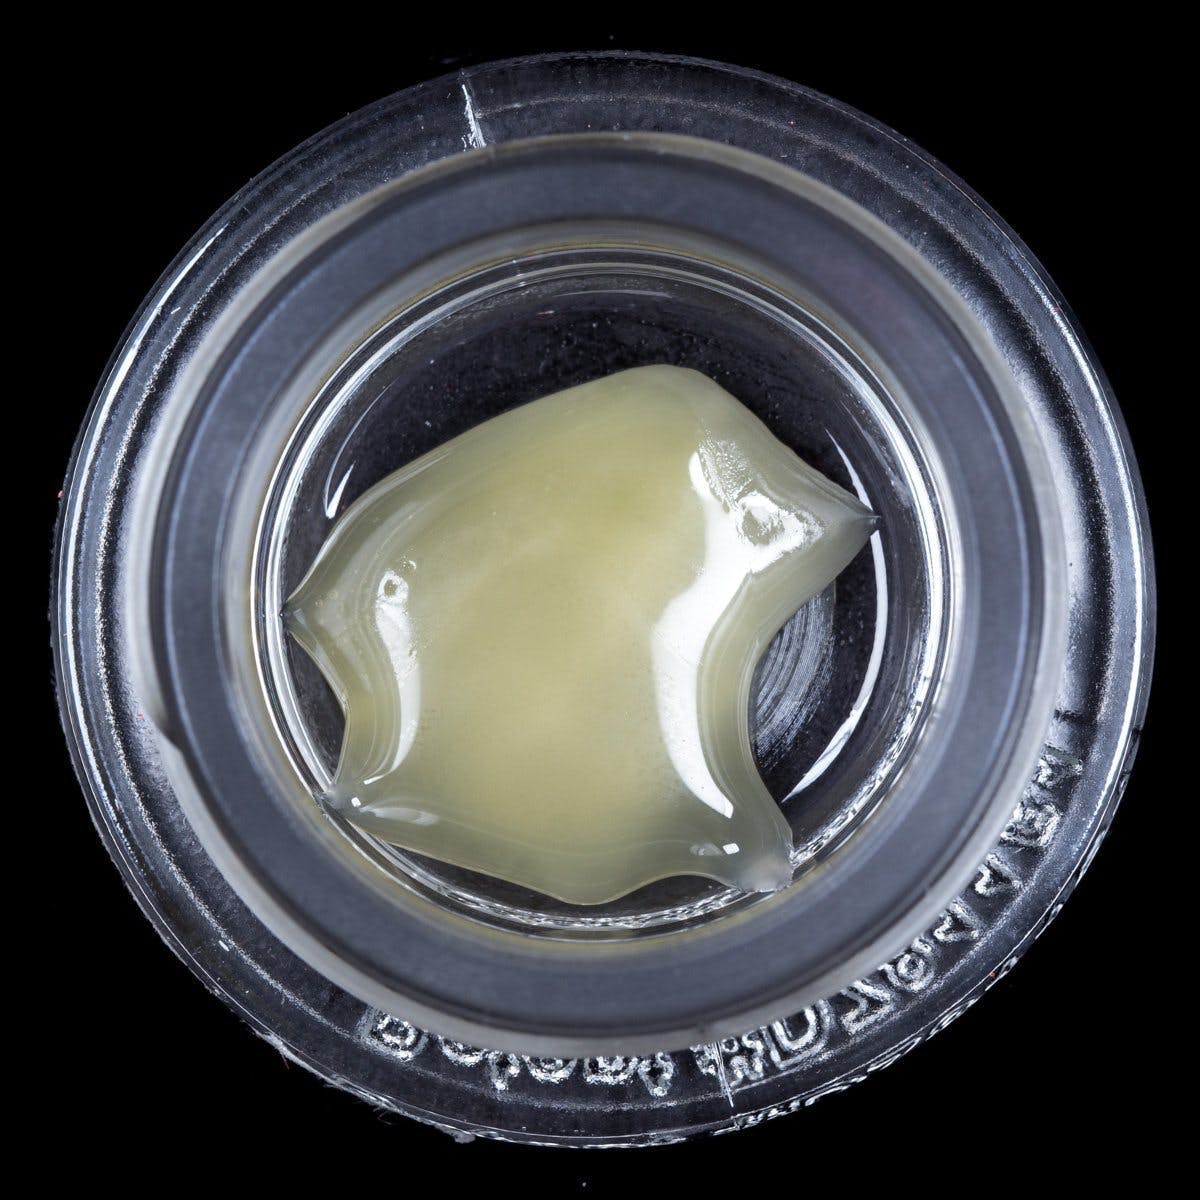 Gorilla Dosha #3 Sauce 69.70%THC (710 LABS)